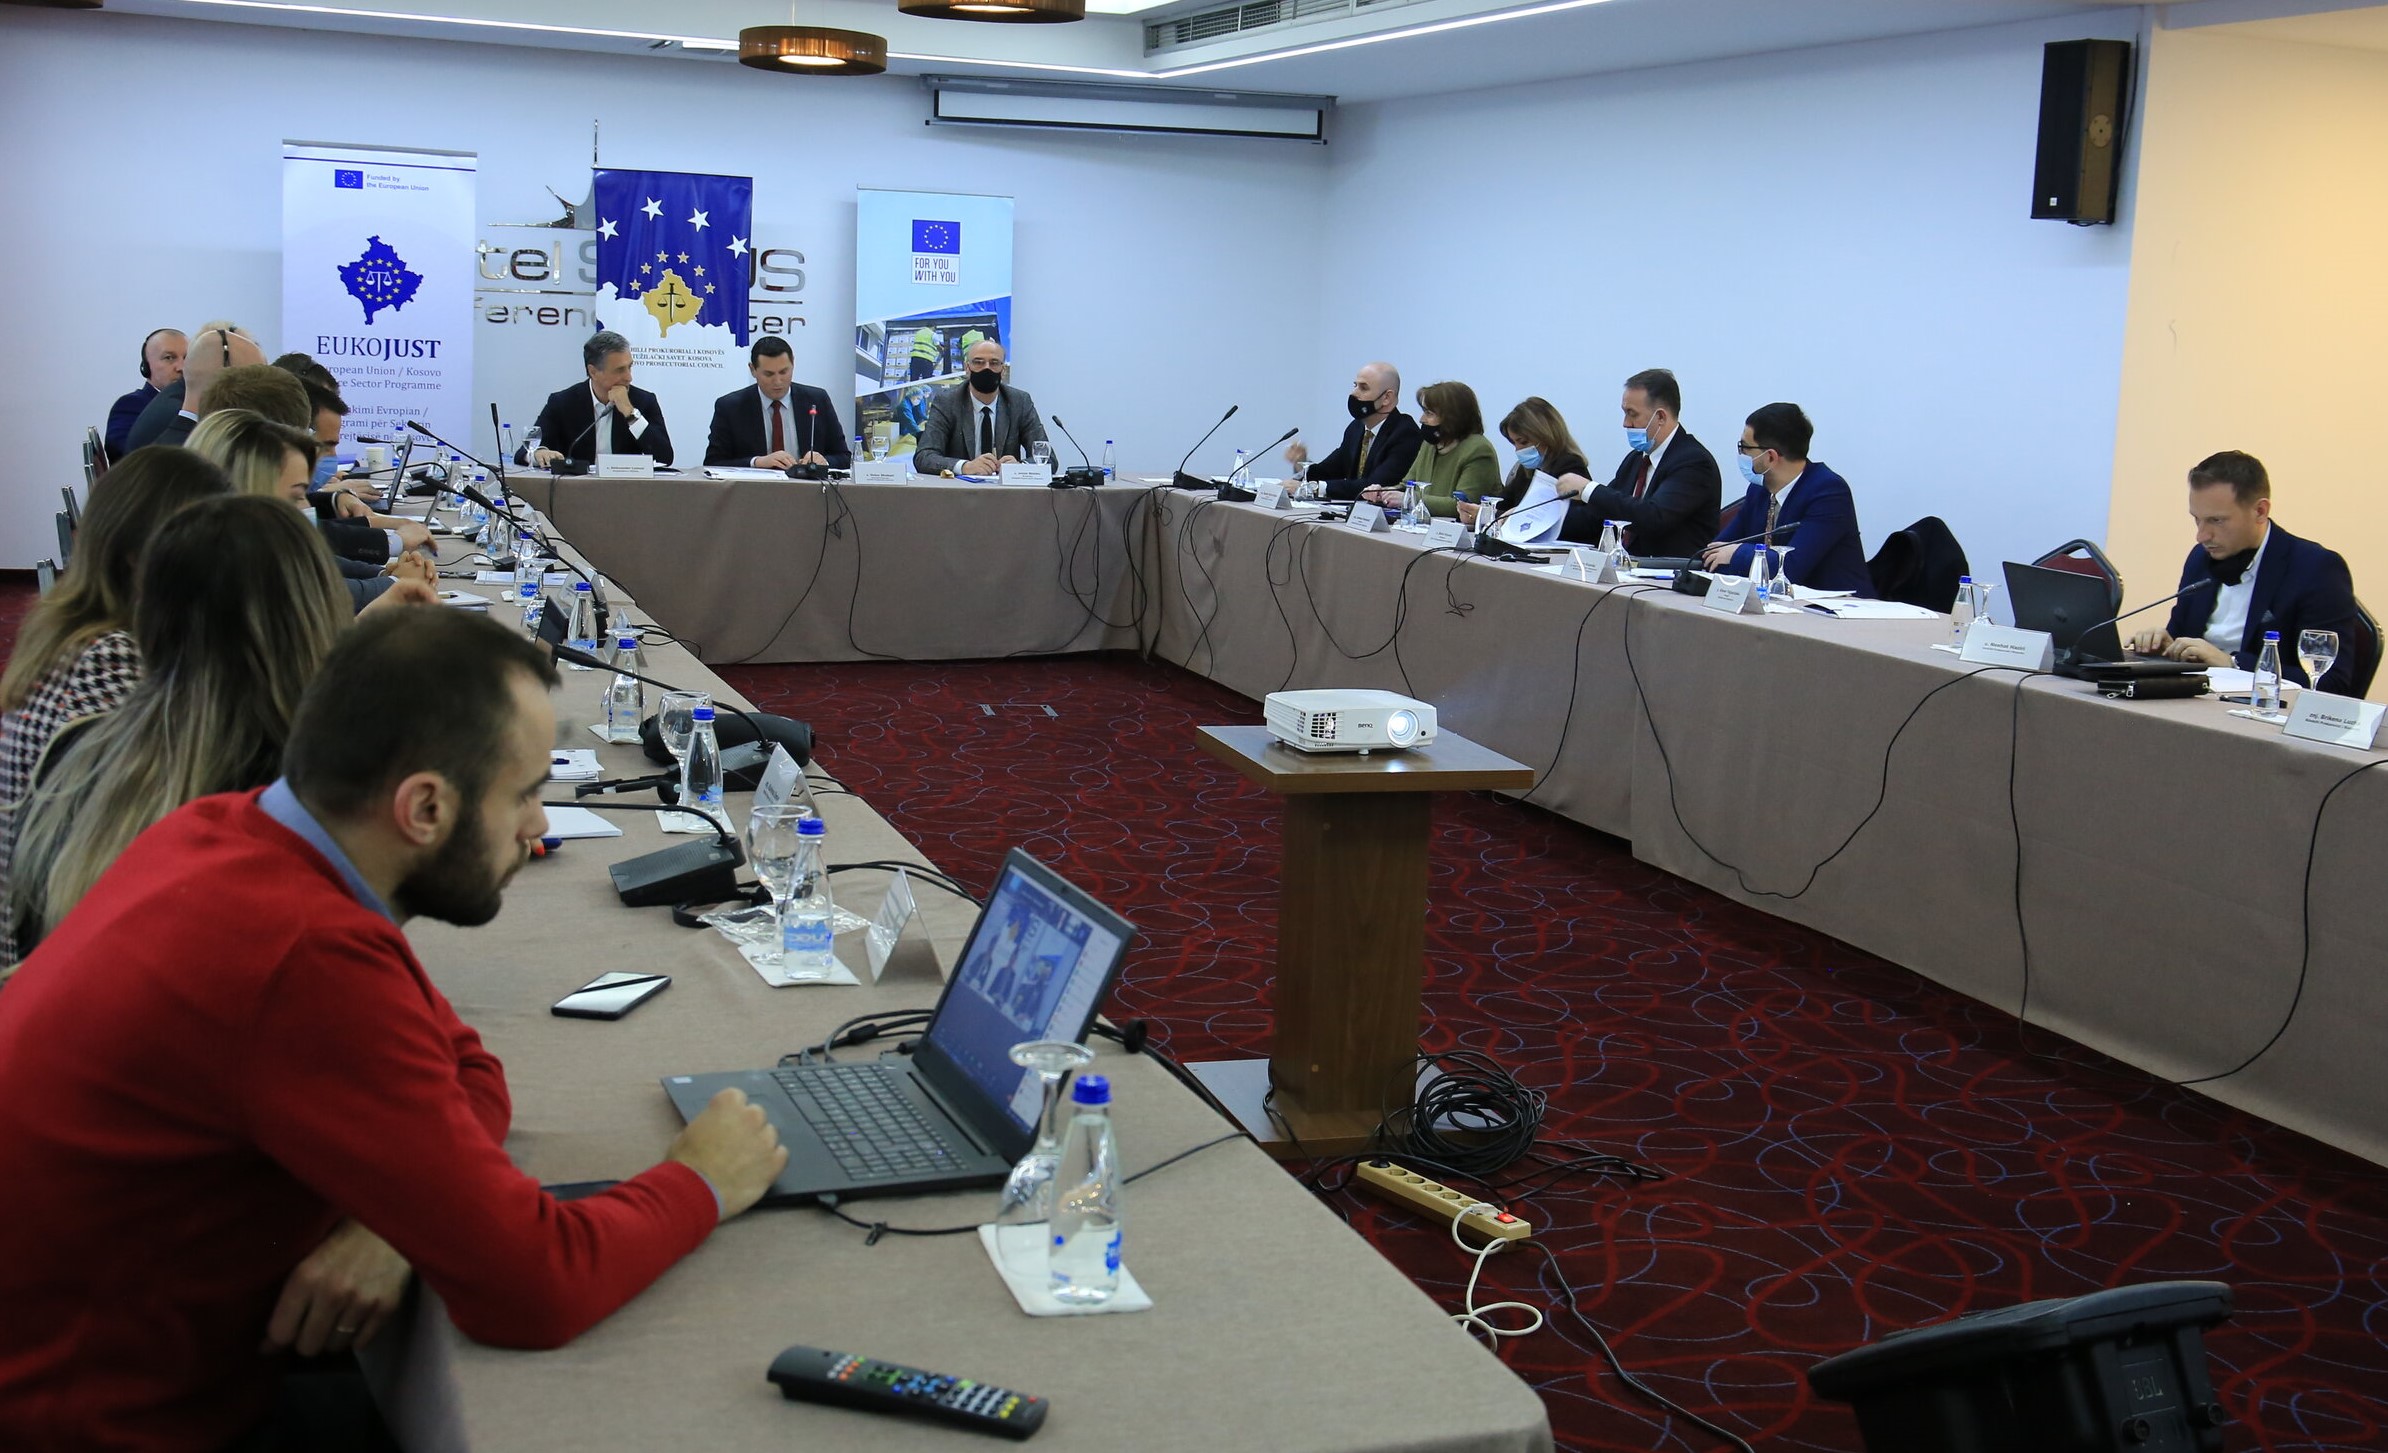 KPC presents the draft Strategic Plan 2022-2024 to international partners and civil society